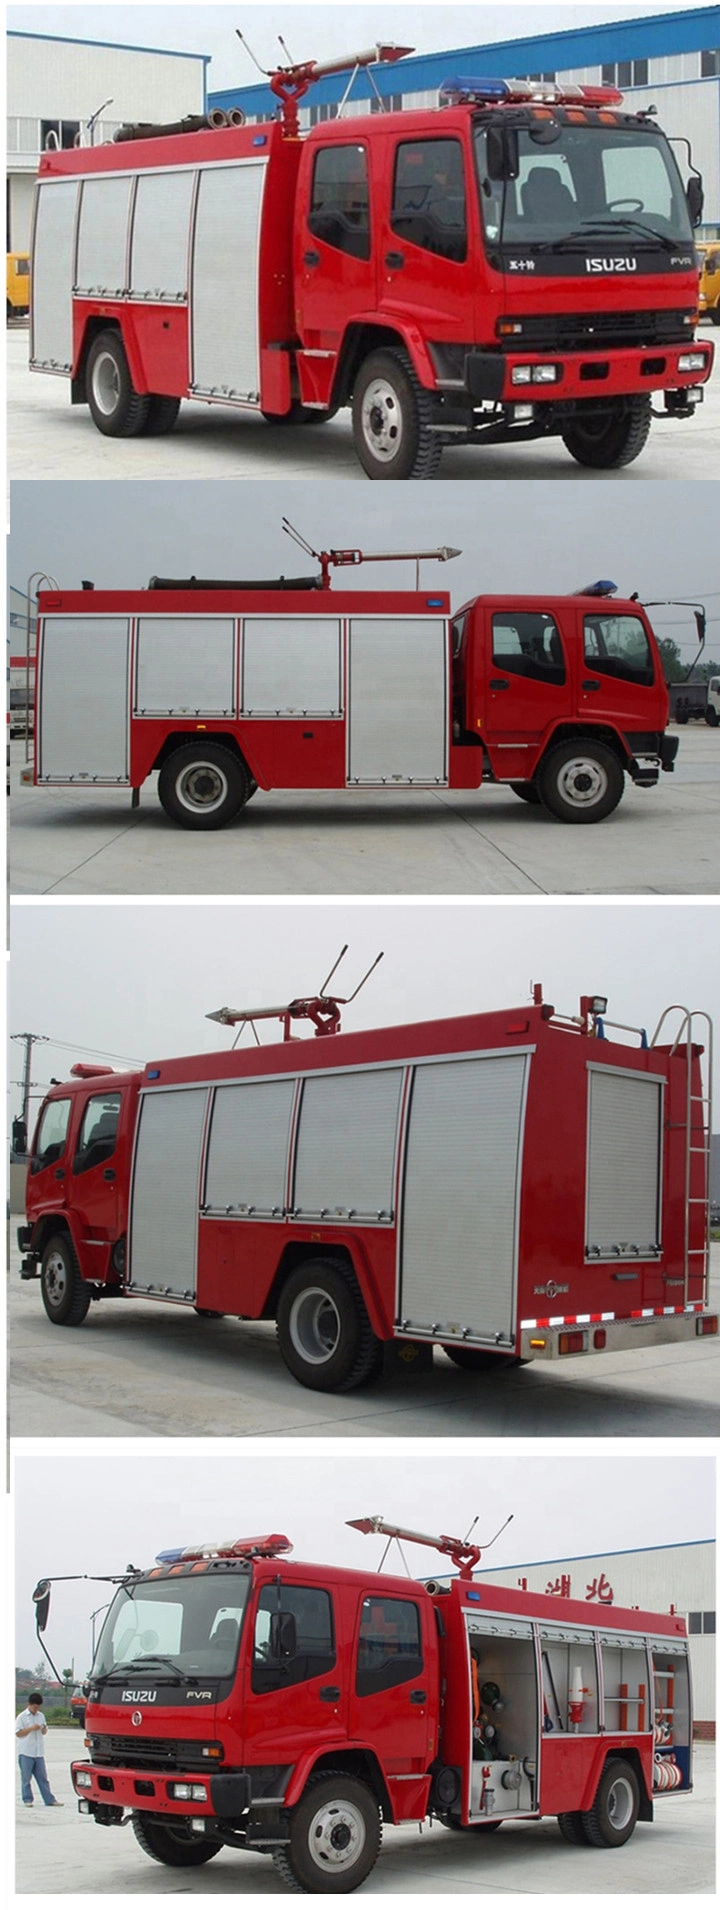 8000 Liter Water Foam Dry Powder Fire Fighting Vehicle Isuzu Fire Engine